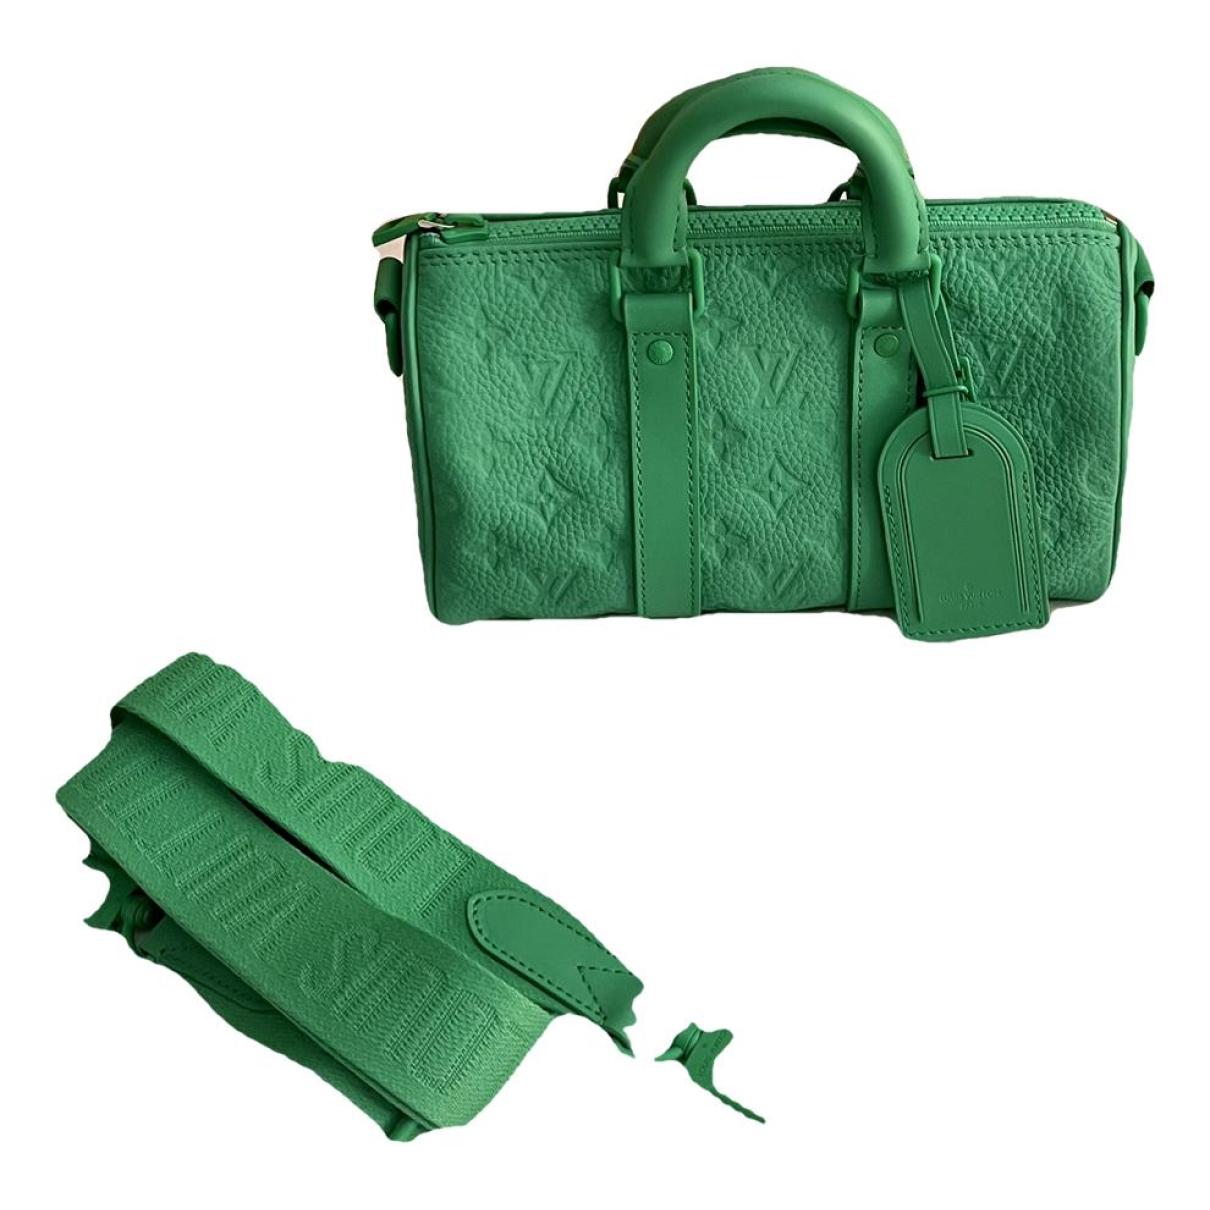 Trio messenger leather bag Louis Vuitton Multicolour in Leather - 31094590